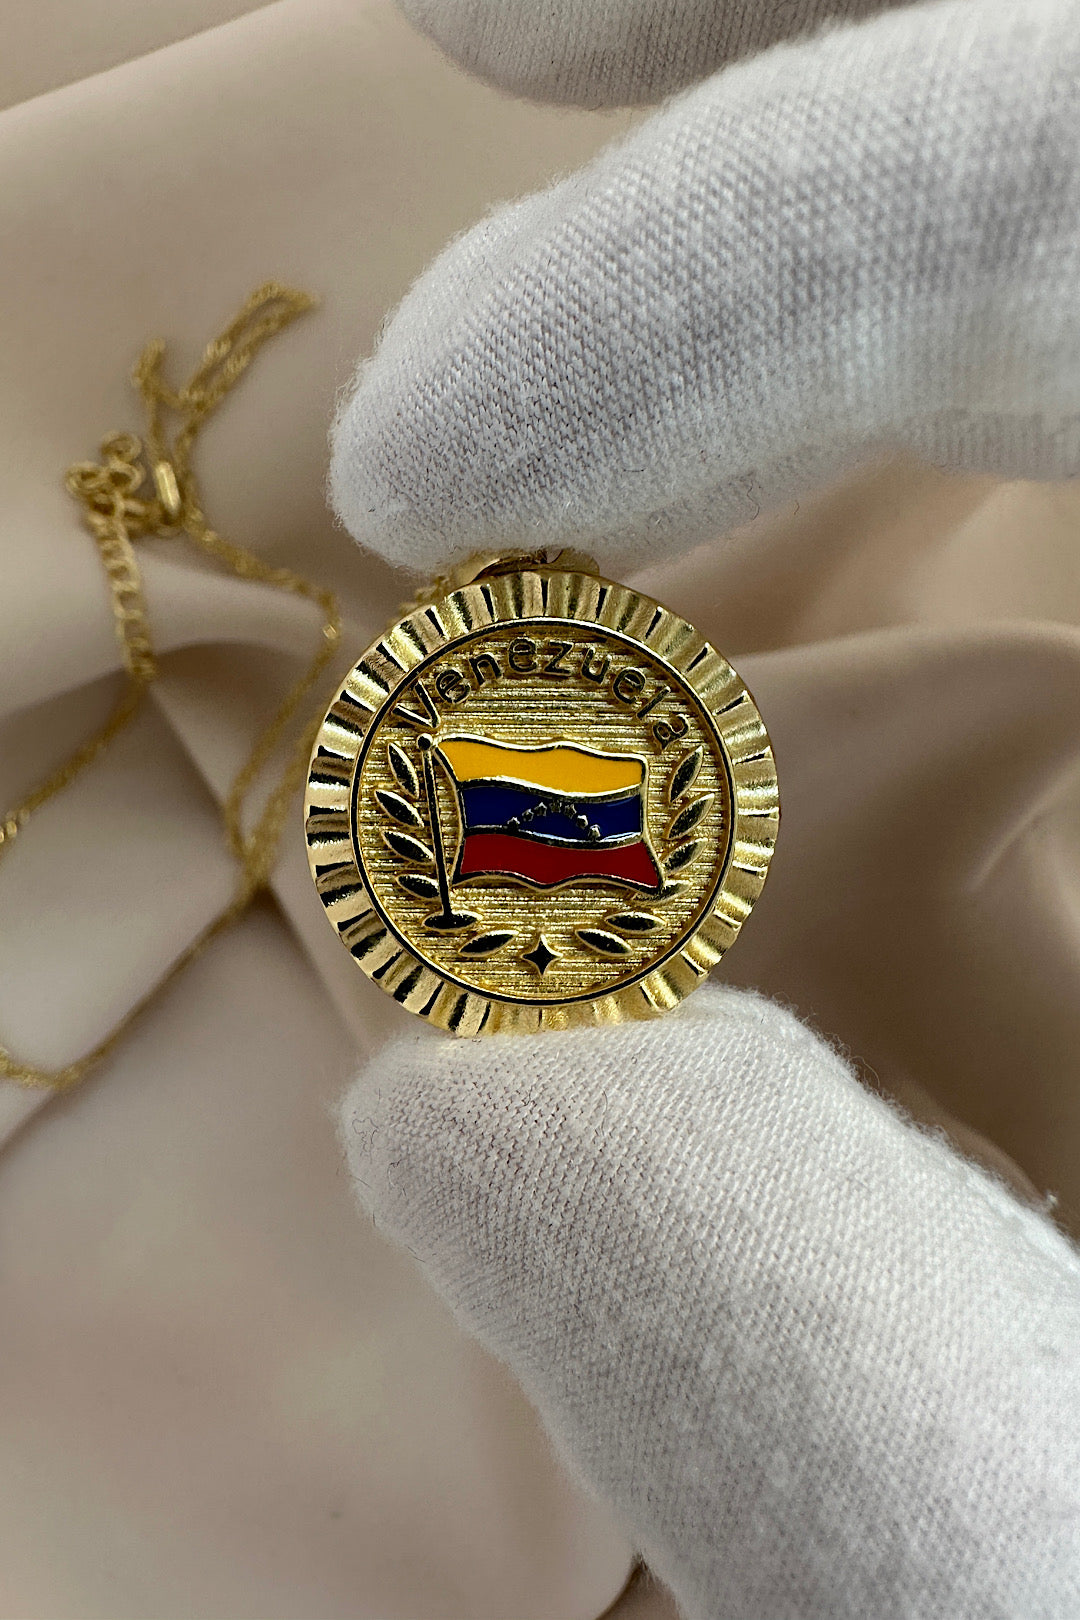 Venezuela flag Necklace